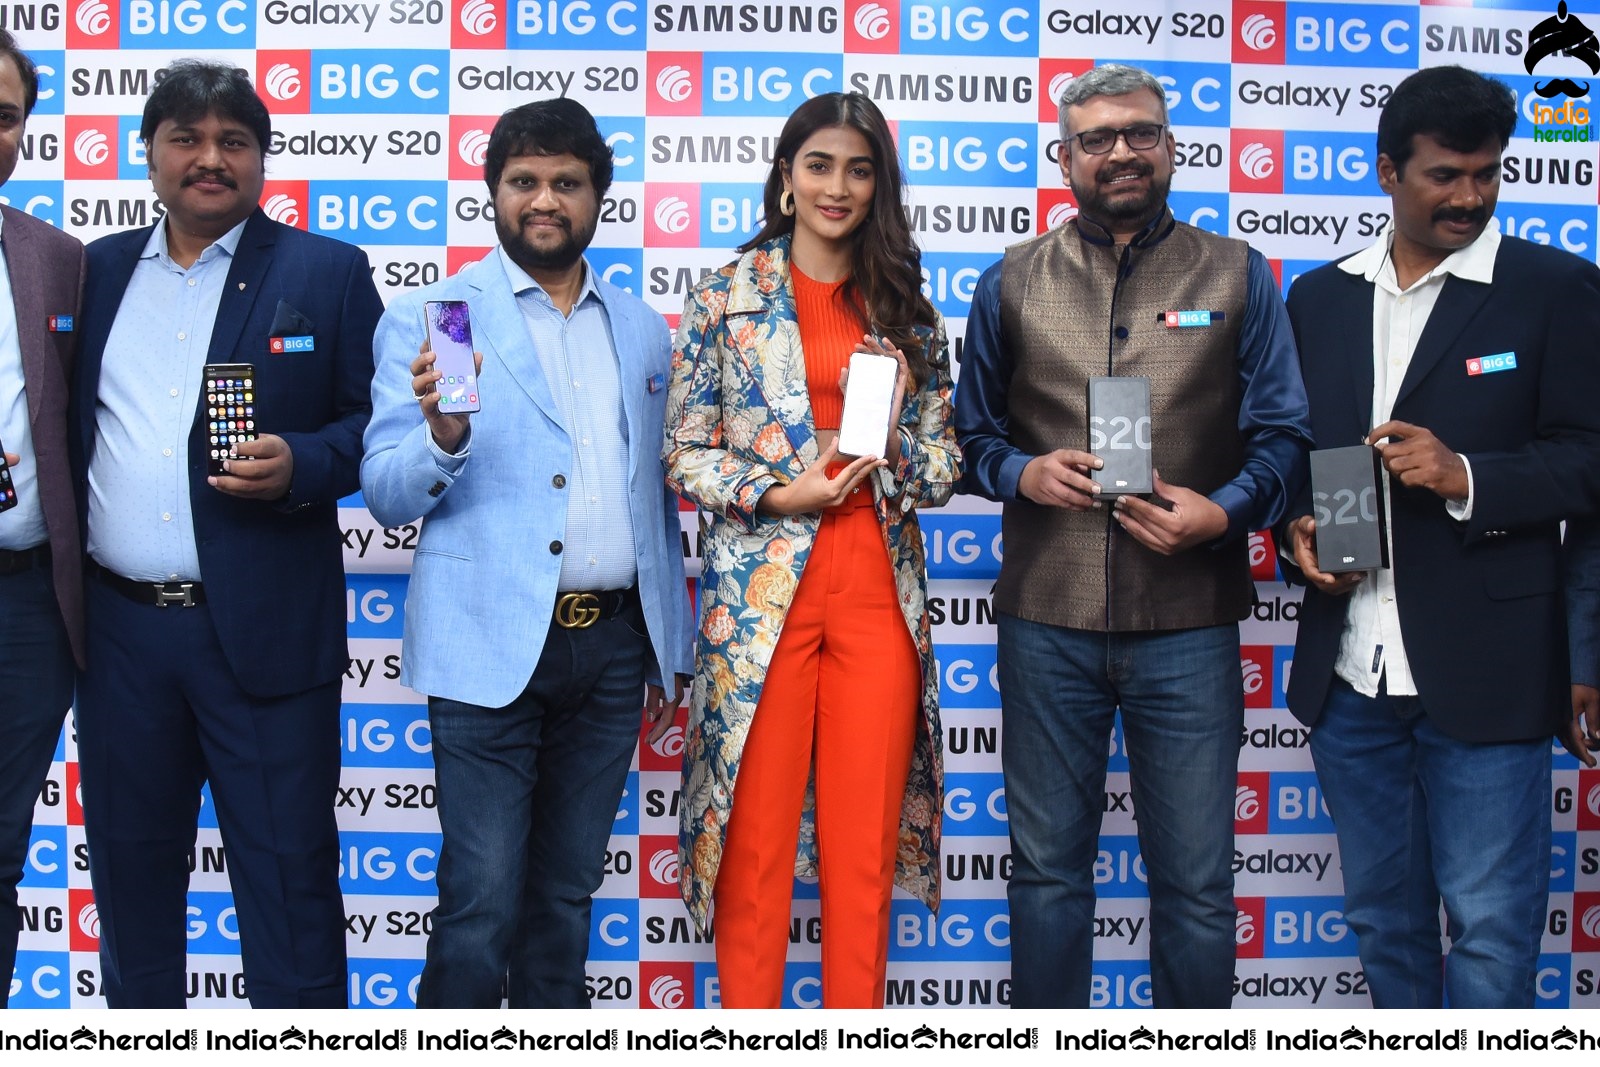 Pooja Hegde launches Samsung Galaxy S20 at Big C Madhapur Set 2